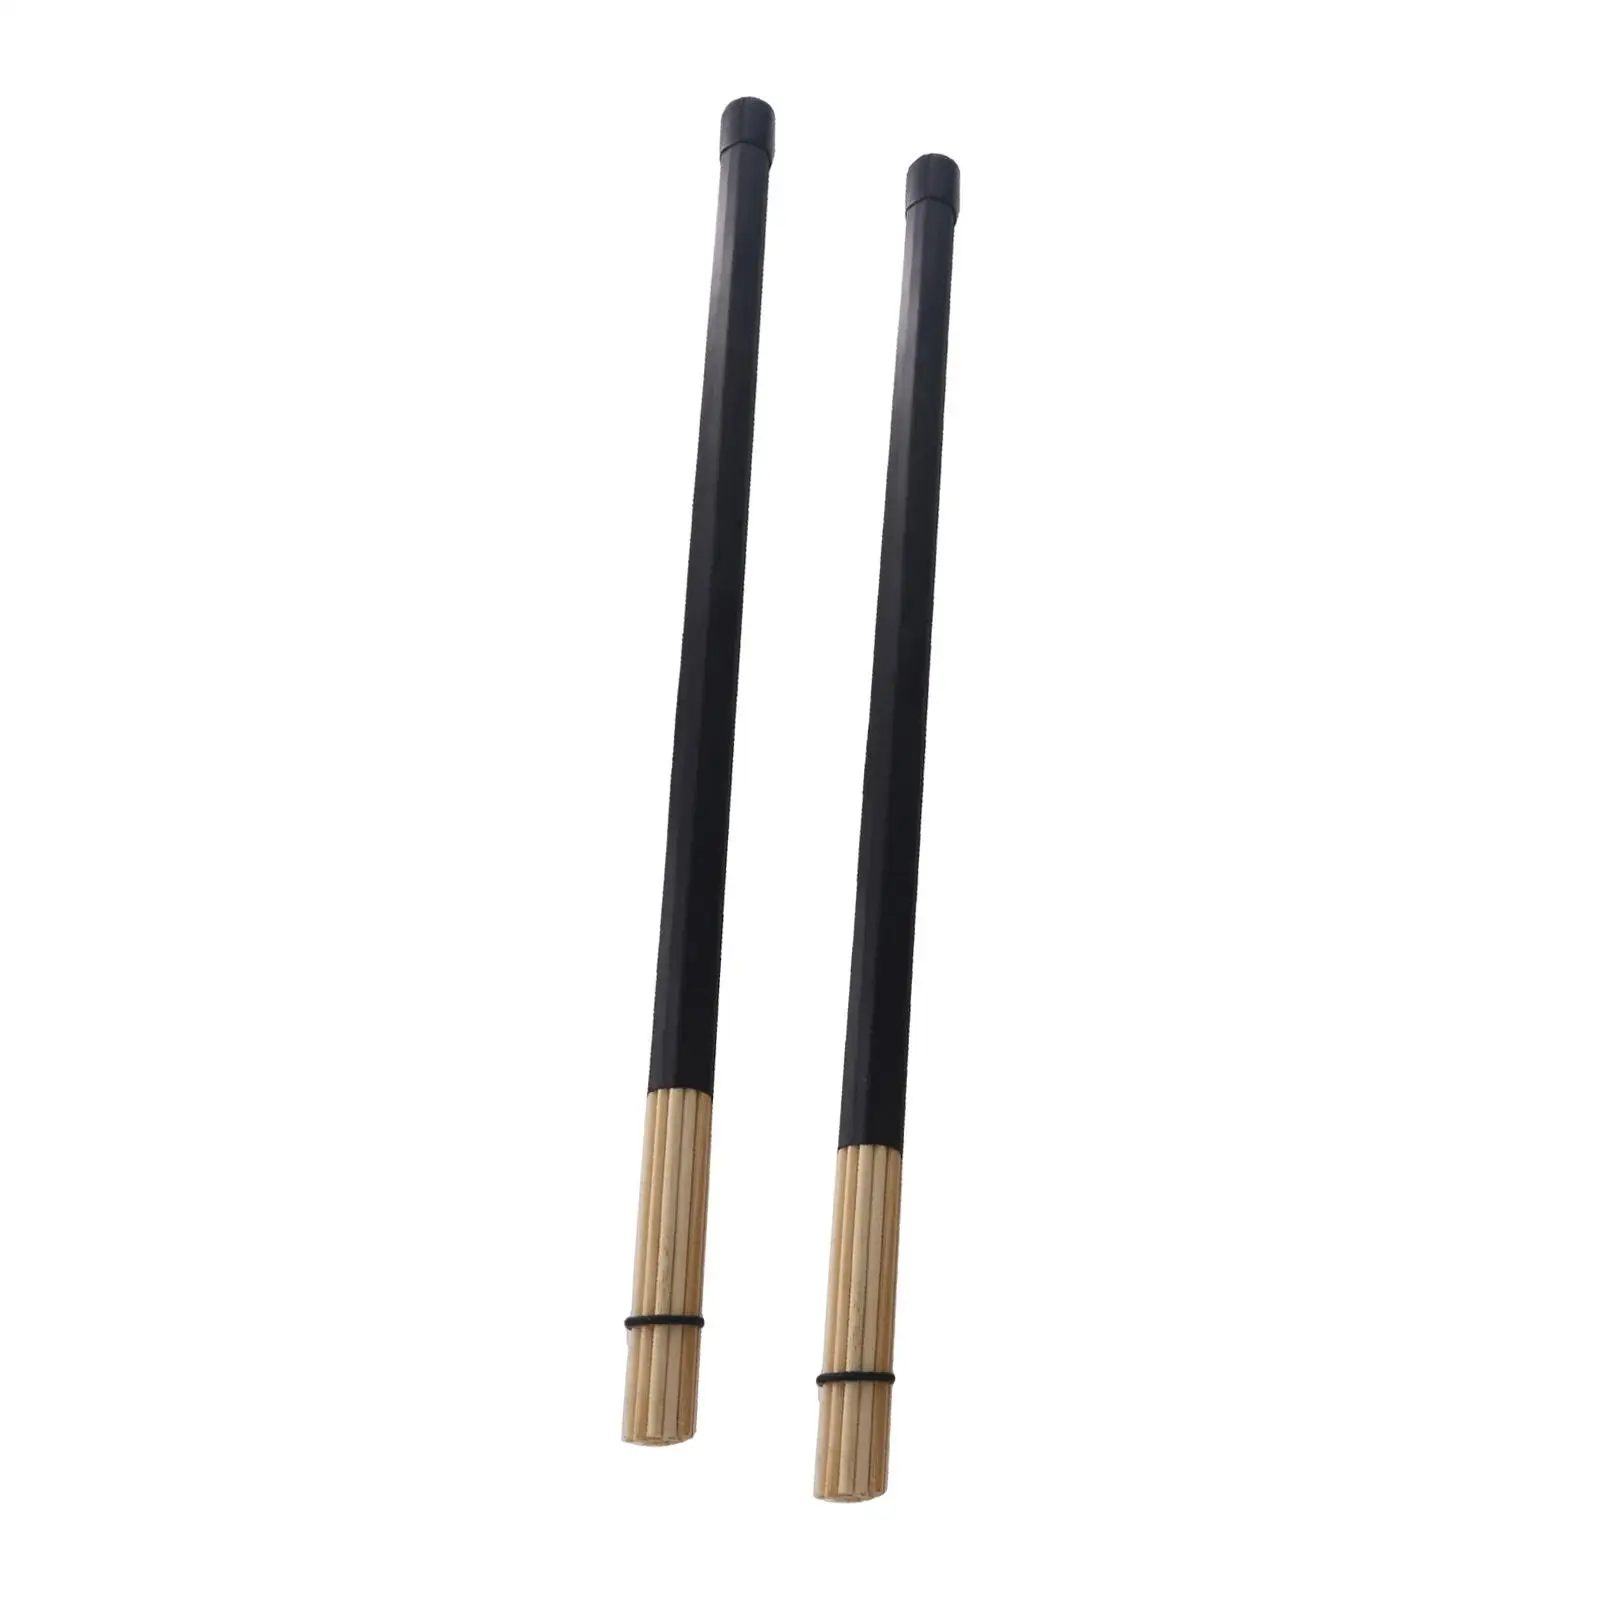 2Pcs Rods Drumsticks Jazz Drumsticks with Rubber Handle Hand Drum Drumsticks